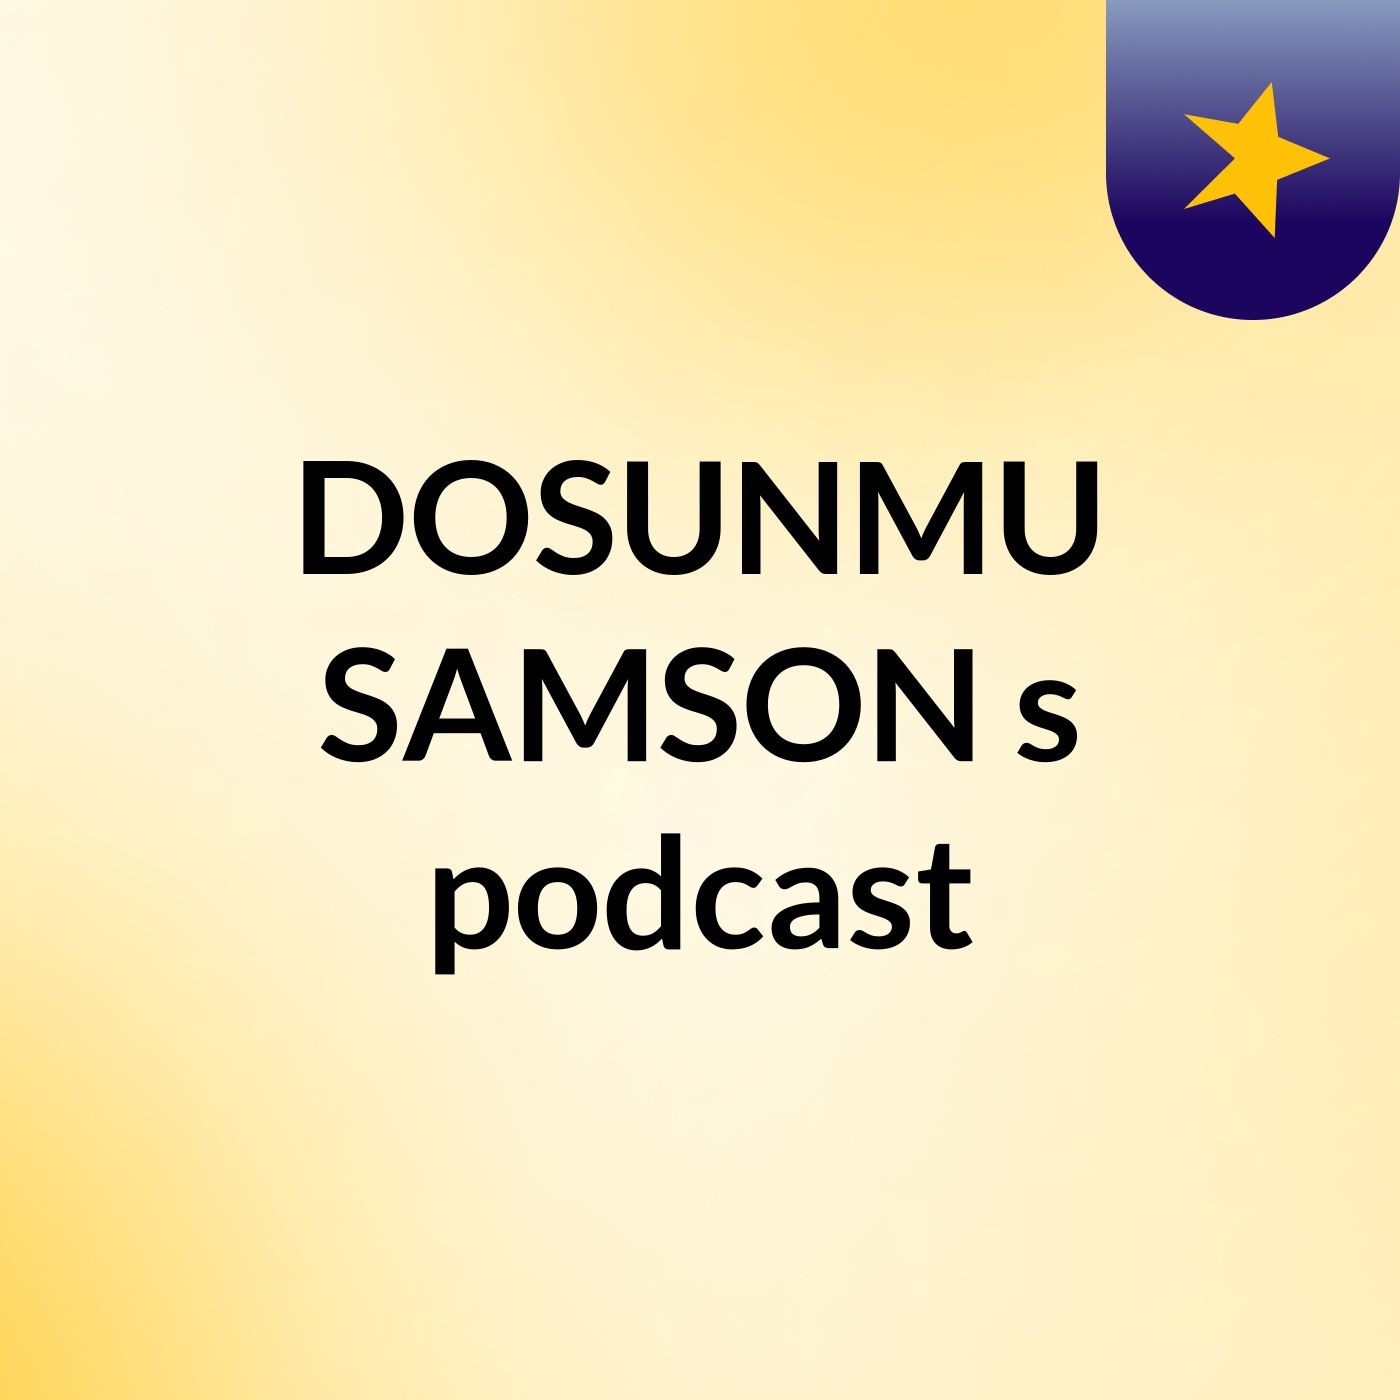 Episode 4 - DOSUNMU SAMSON's podcast